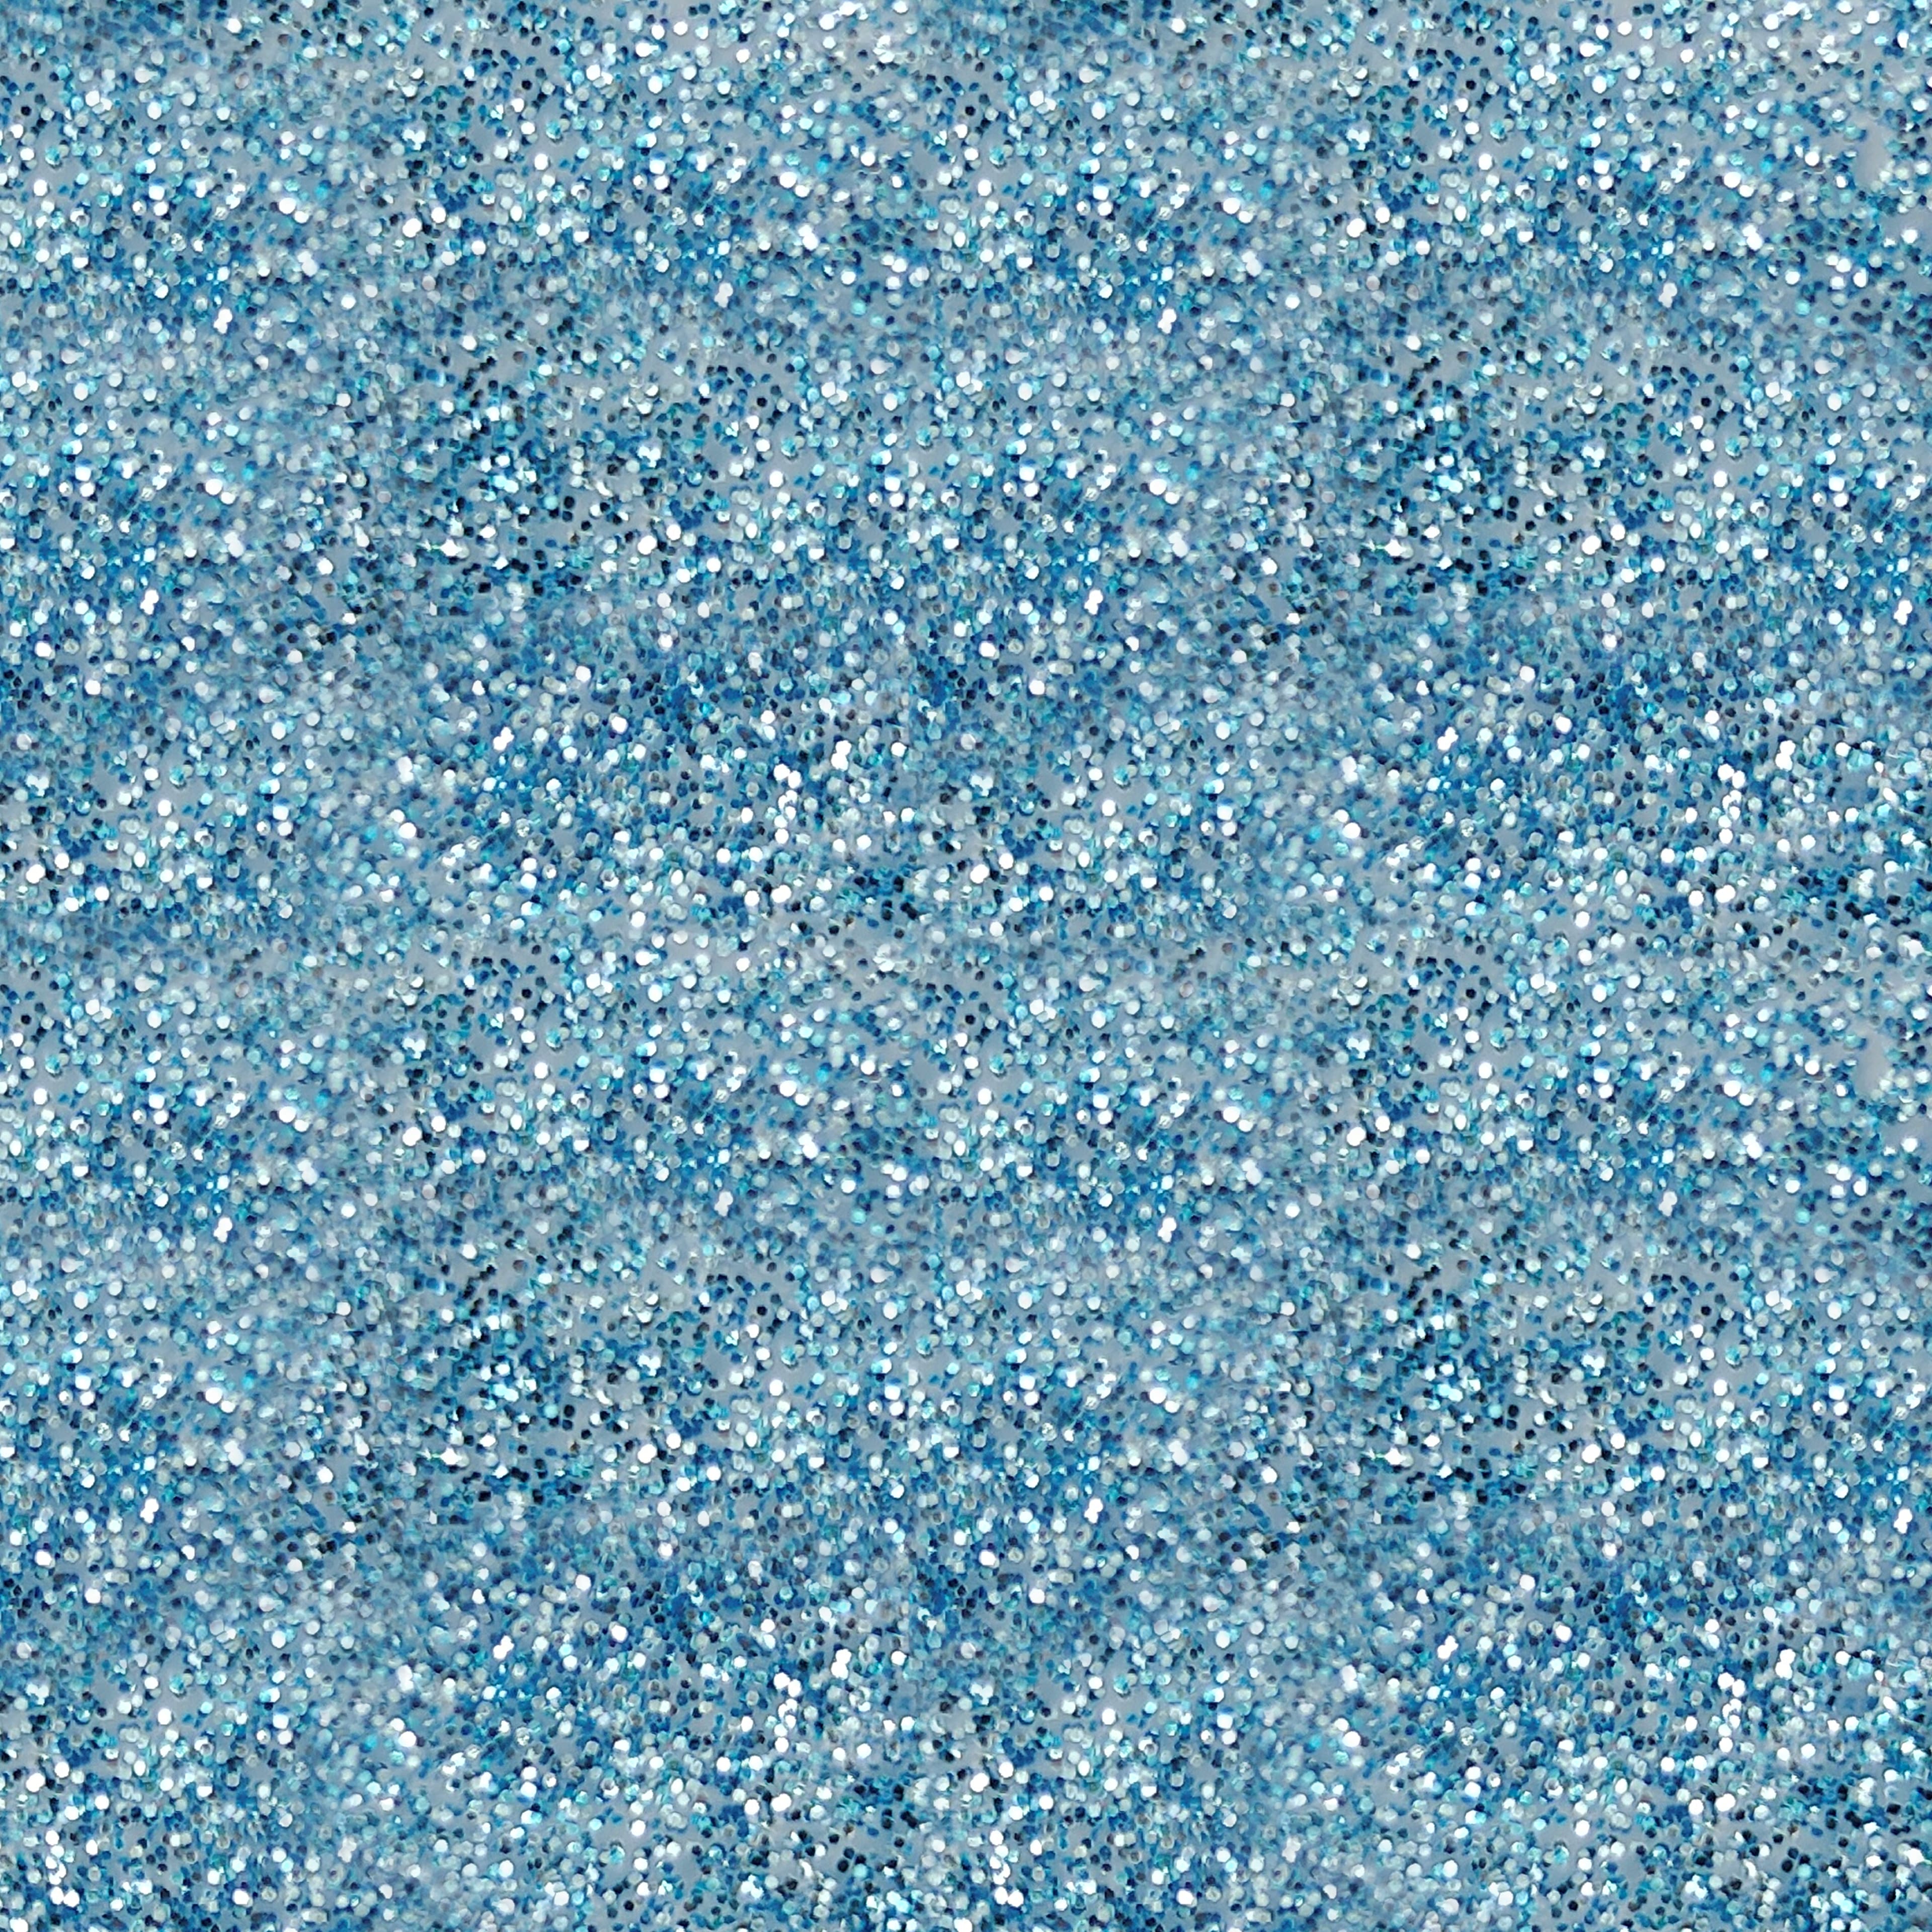 12 Pack: 3.96oz. Light Blue Pearlized Glitter Glue by Creatology&#x2122;